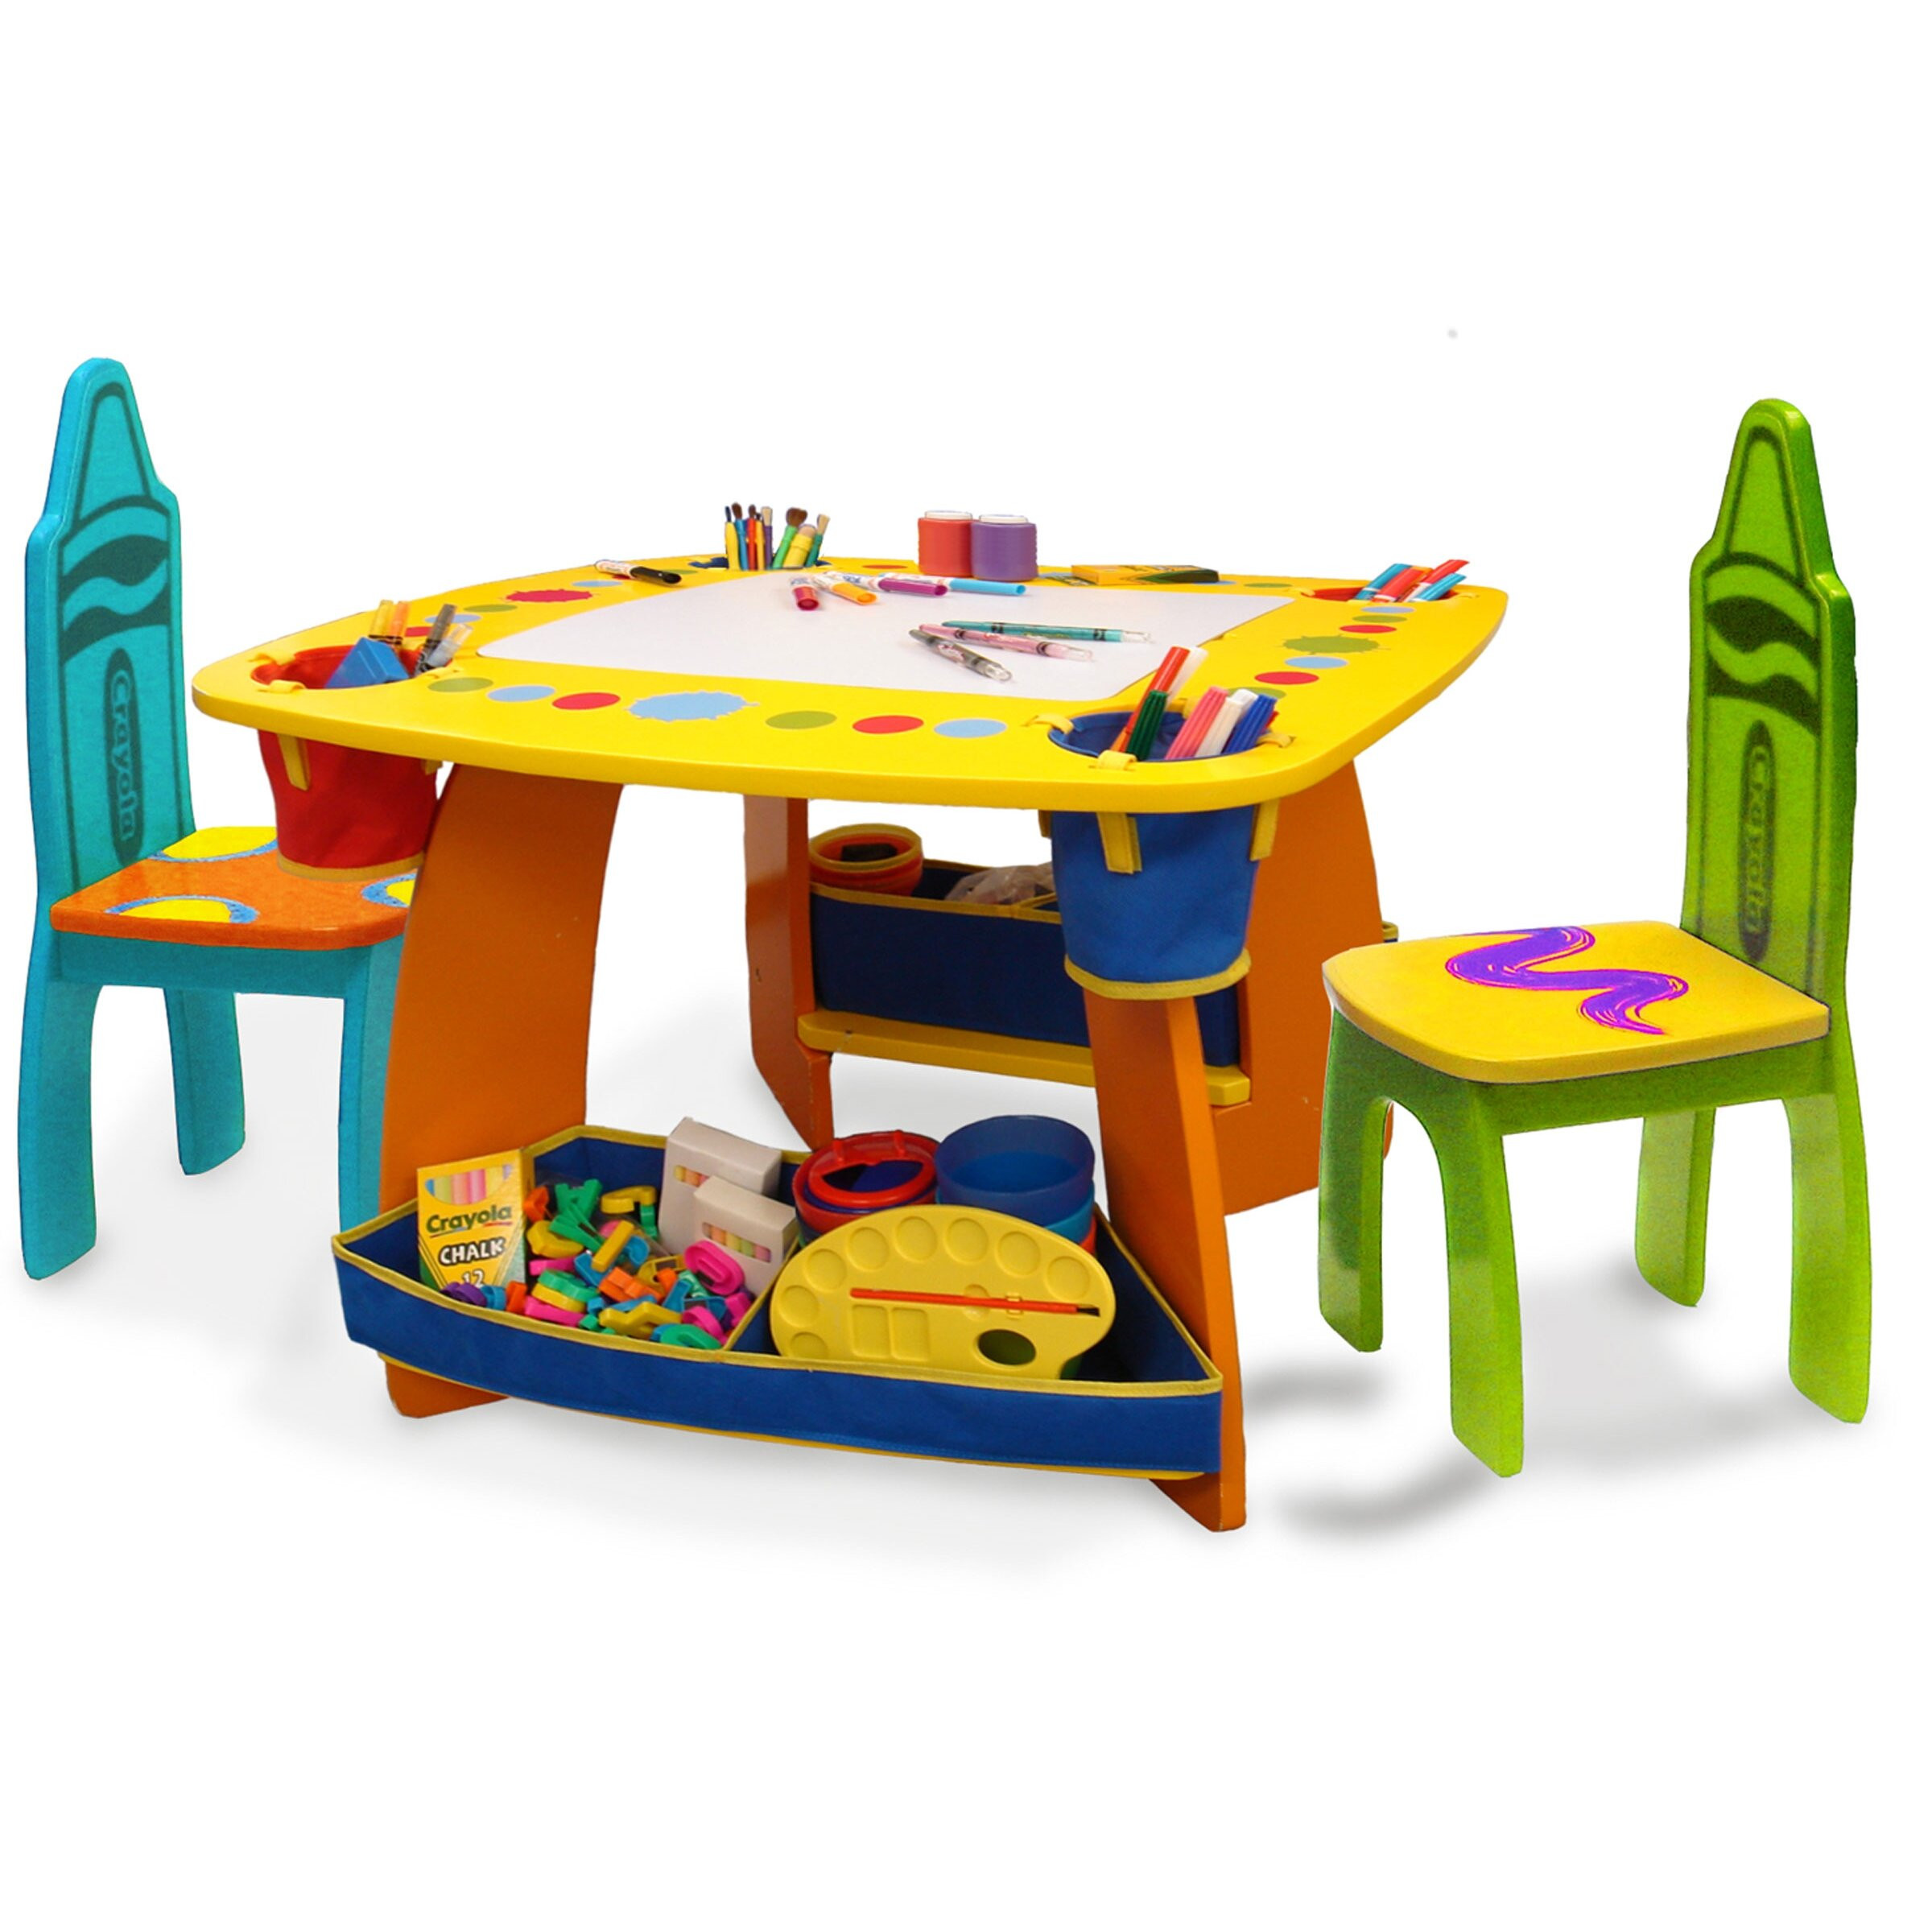 Kids Table And Chair Set
 Grow n Up Crayola Wooden Kids 3 Piece Table and Chair Set